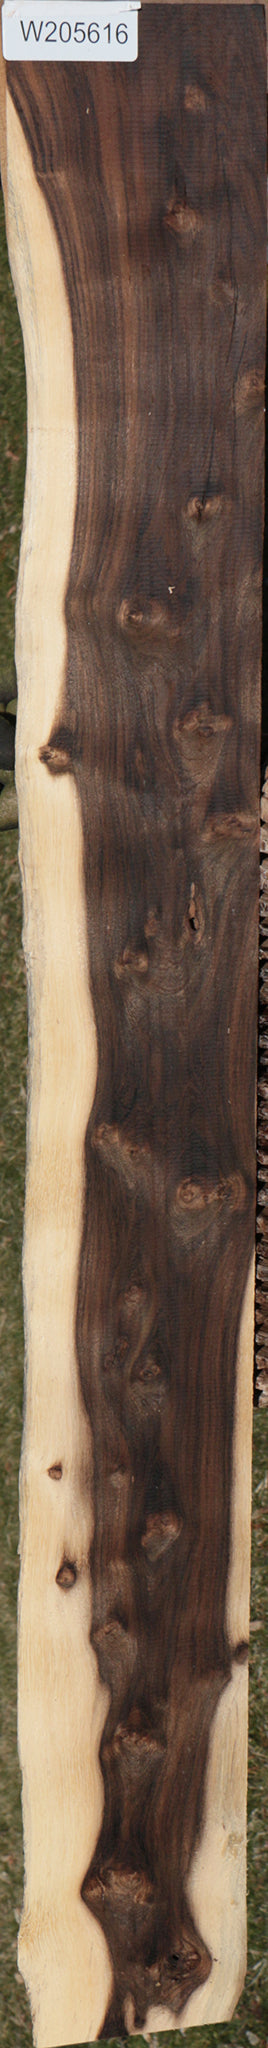 Leadwood Live Edge Micro Lumber